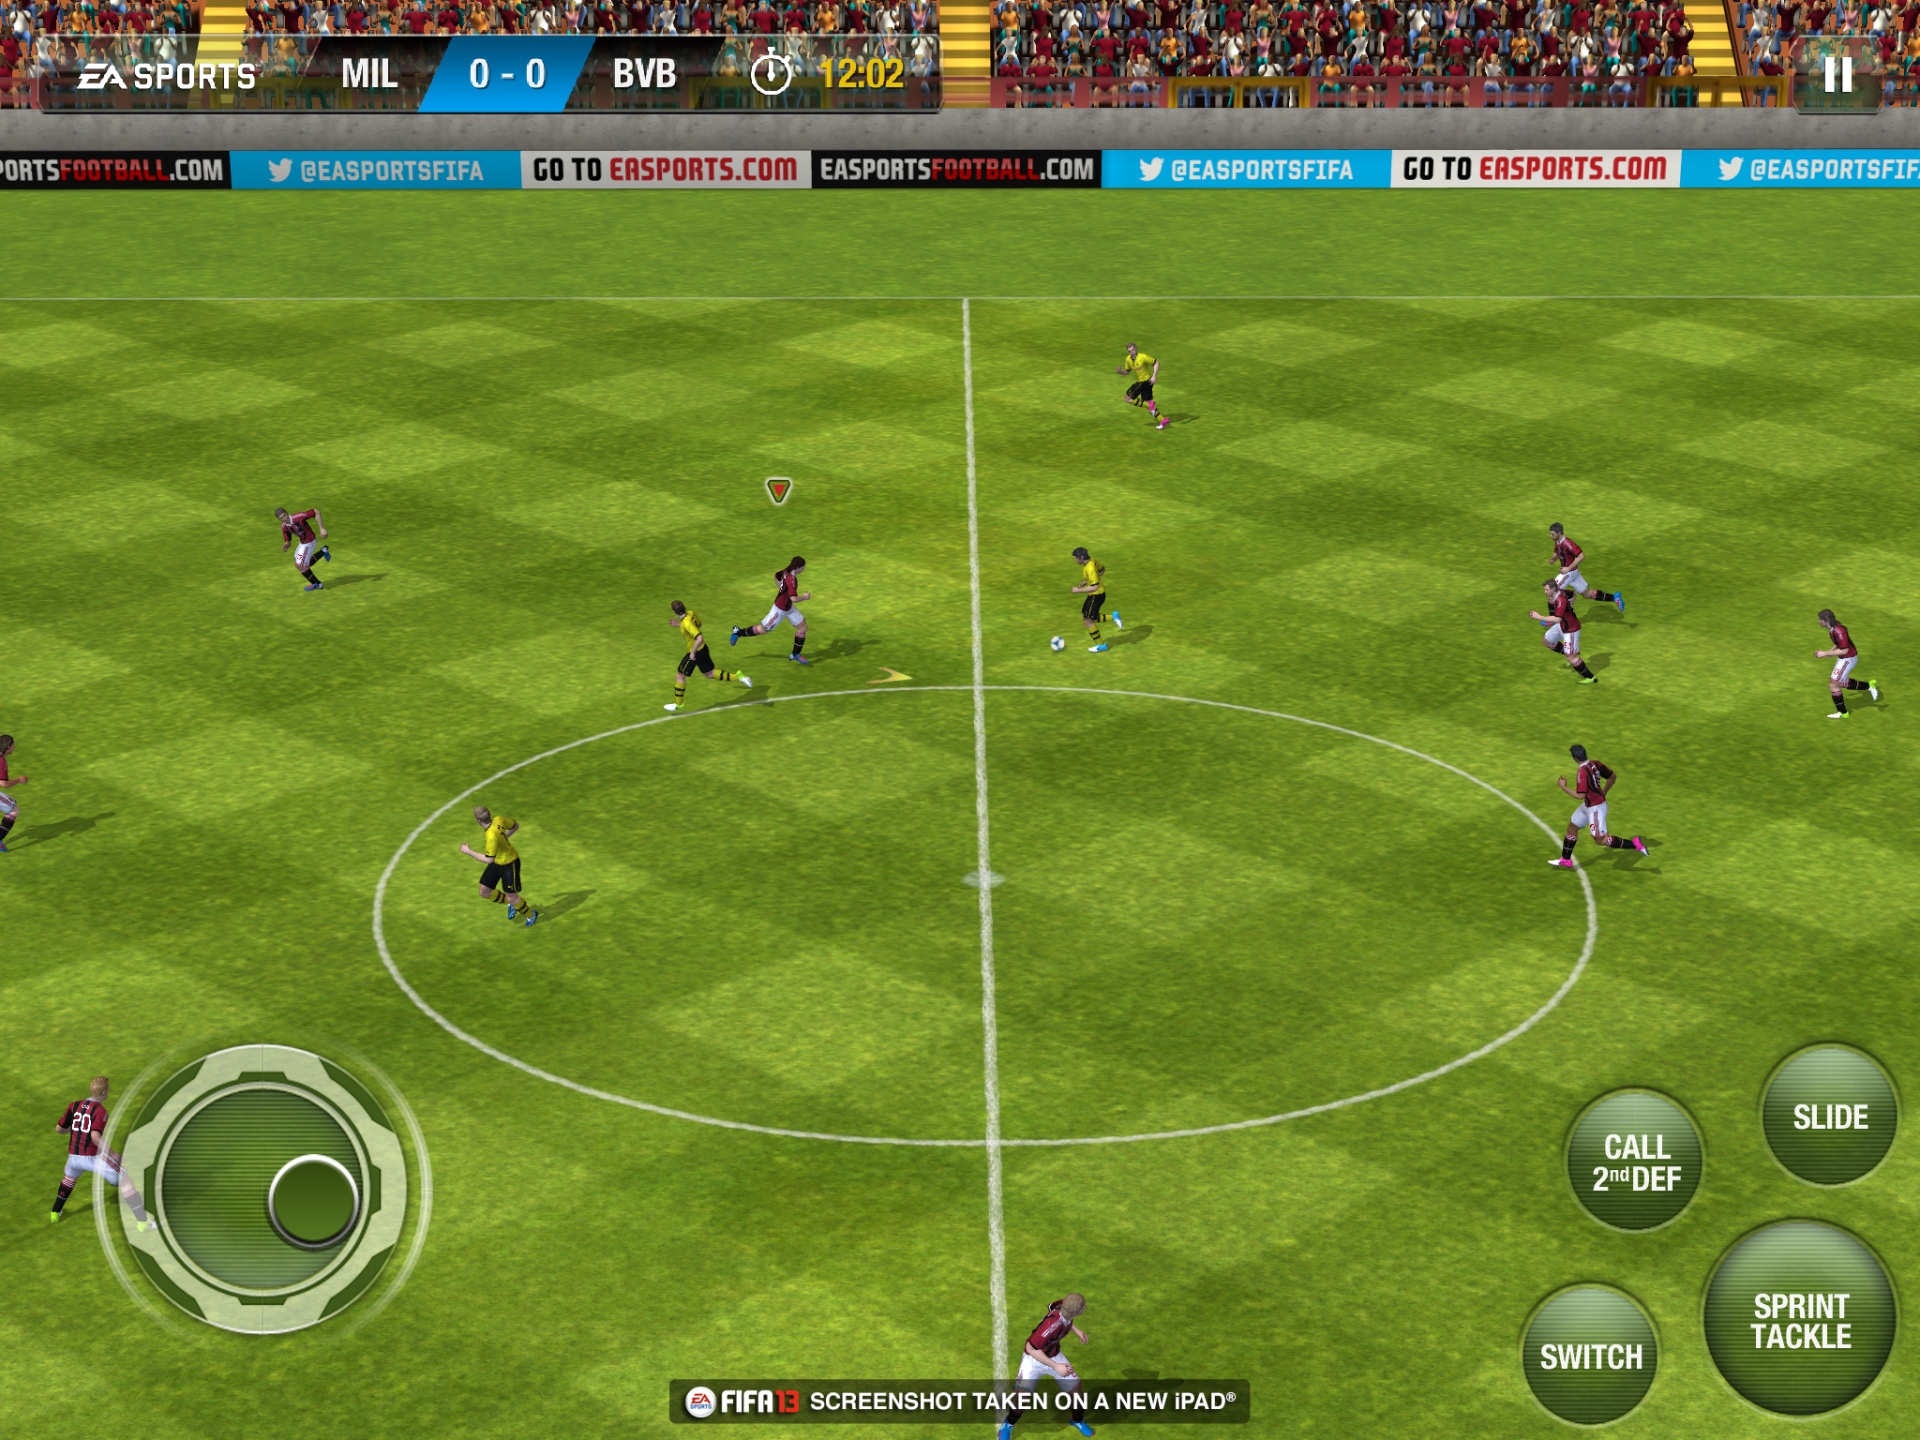 Obrázky z iOS verze FIFA 13 70834